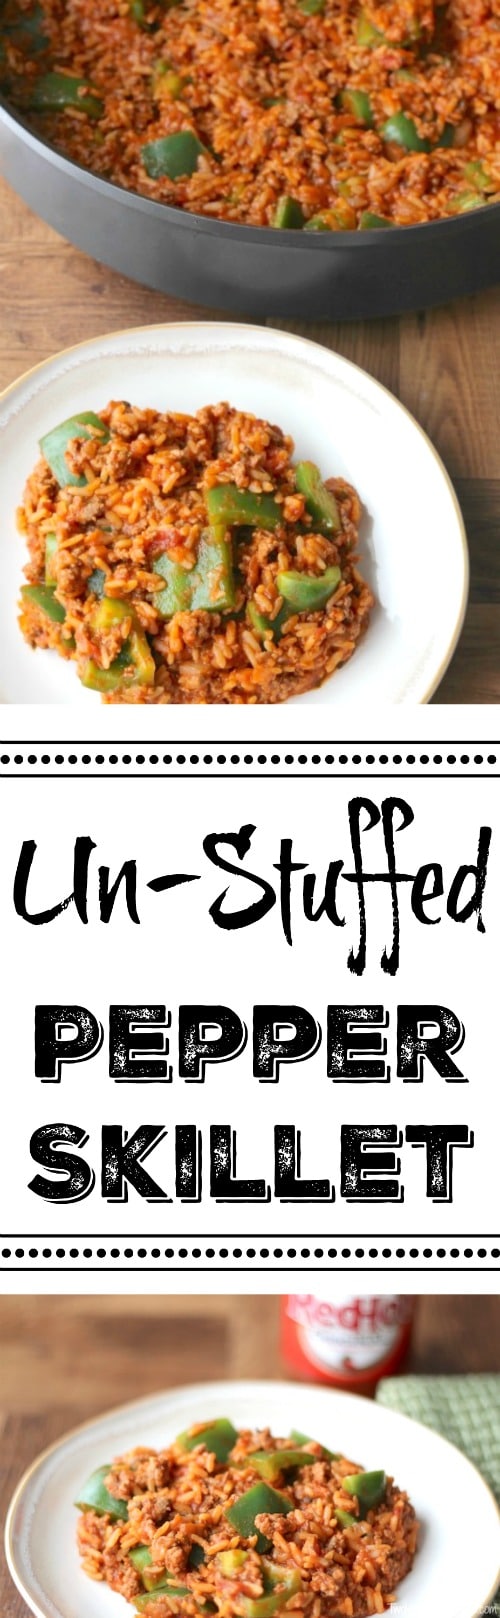 Un-Stuffed Green Pepper Skillet Recipe {www.TwoHealthyKitchens.com}